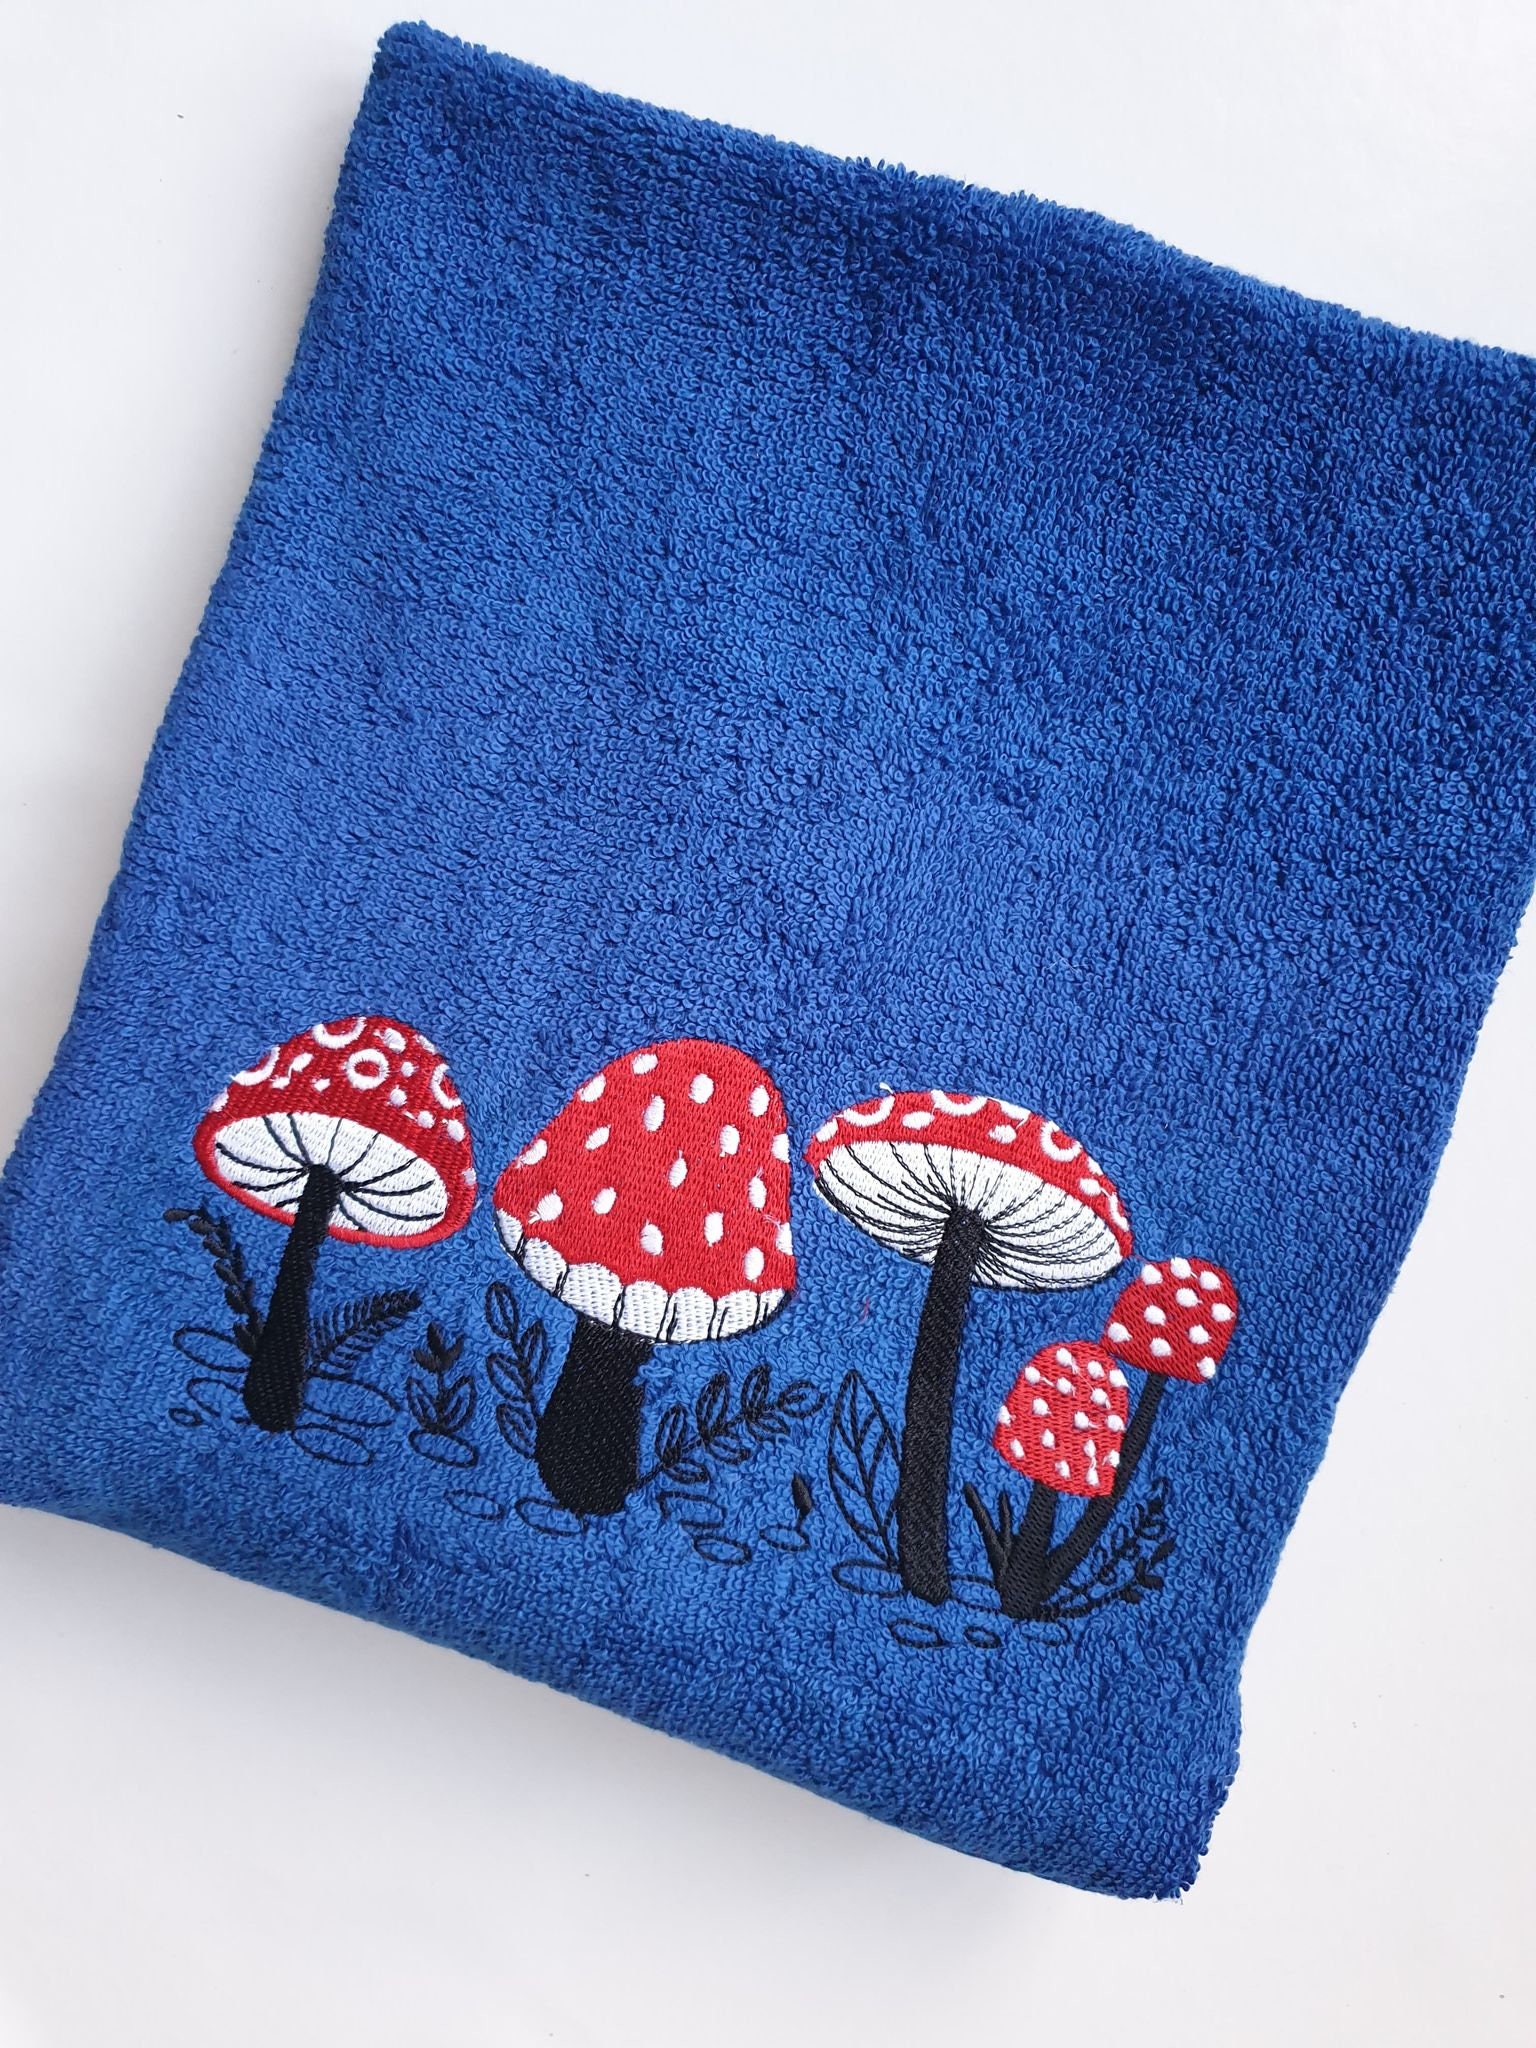 Natural Embroidered Mushroom Kitchen Towel - World Market